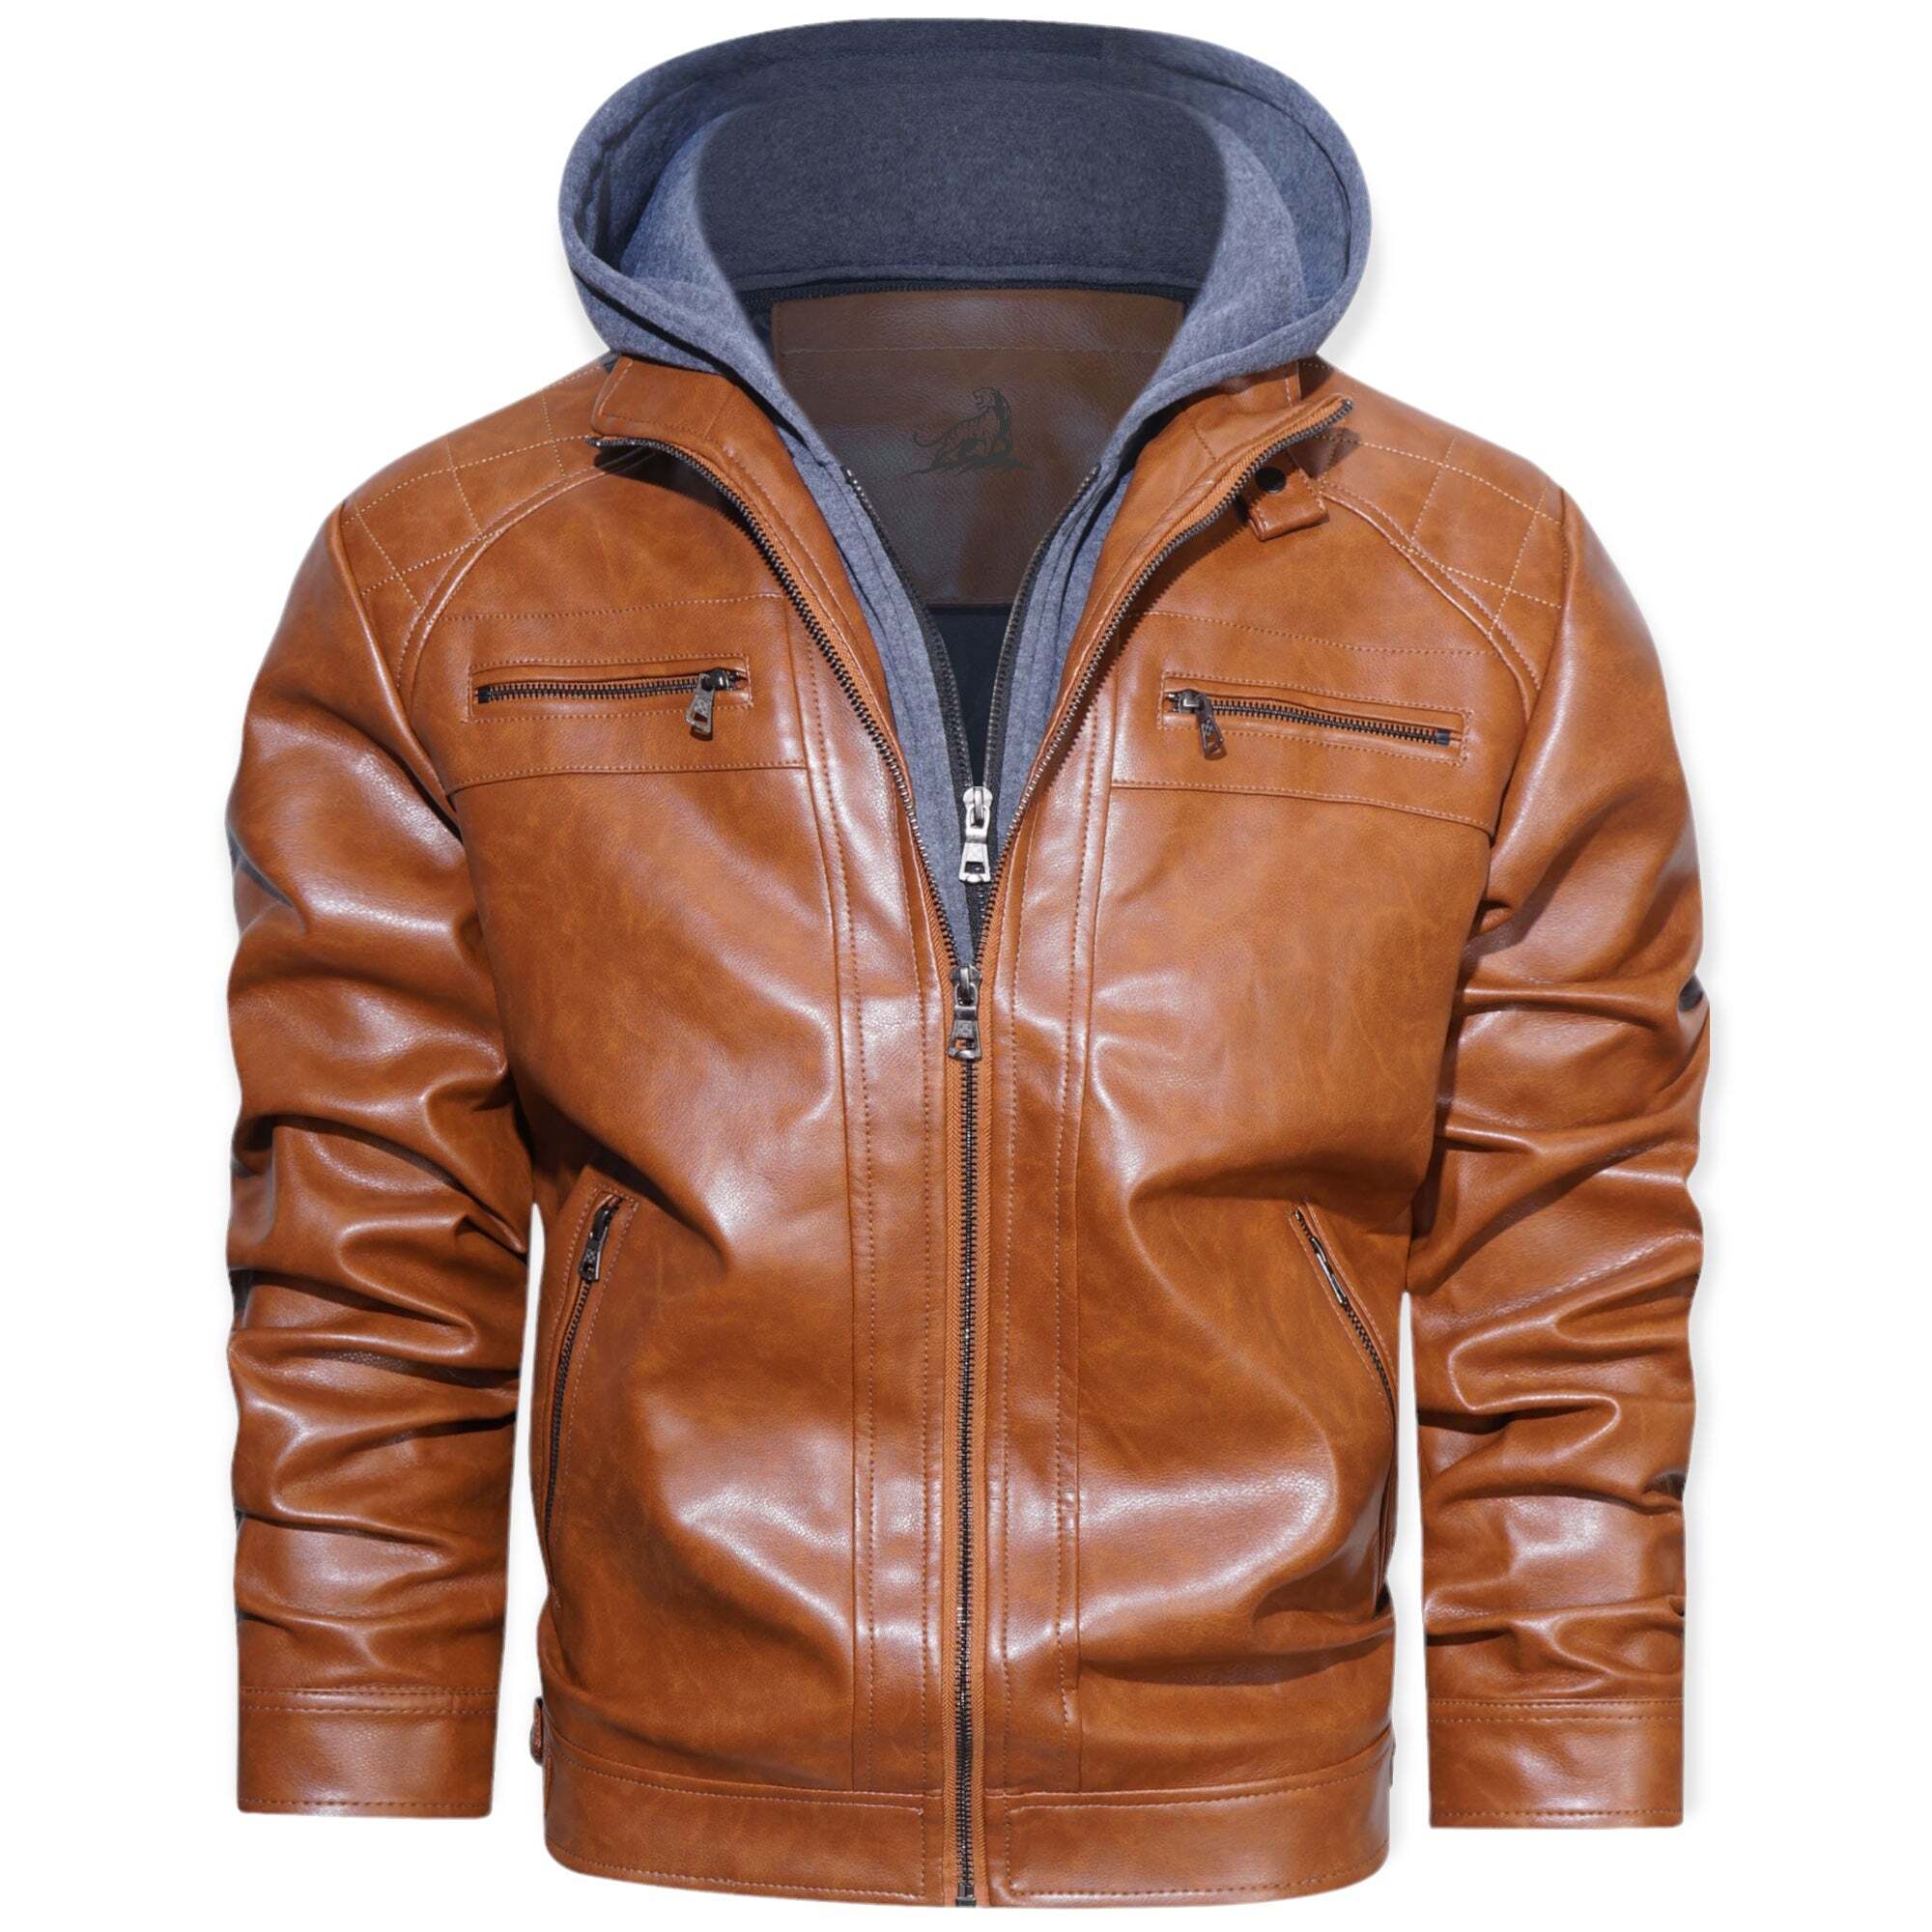 'Sprinter' Leather Jacket